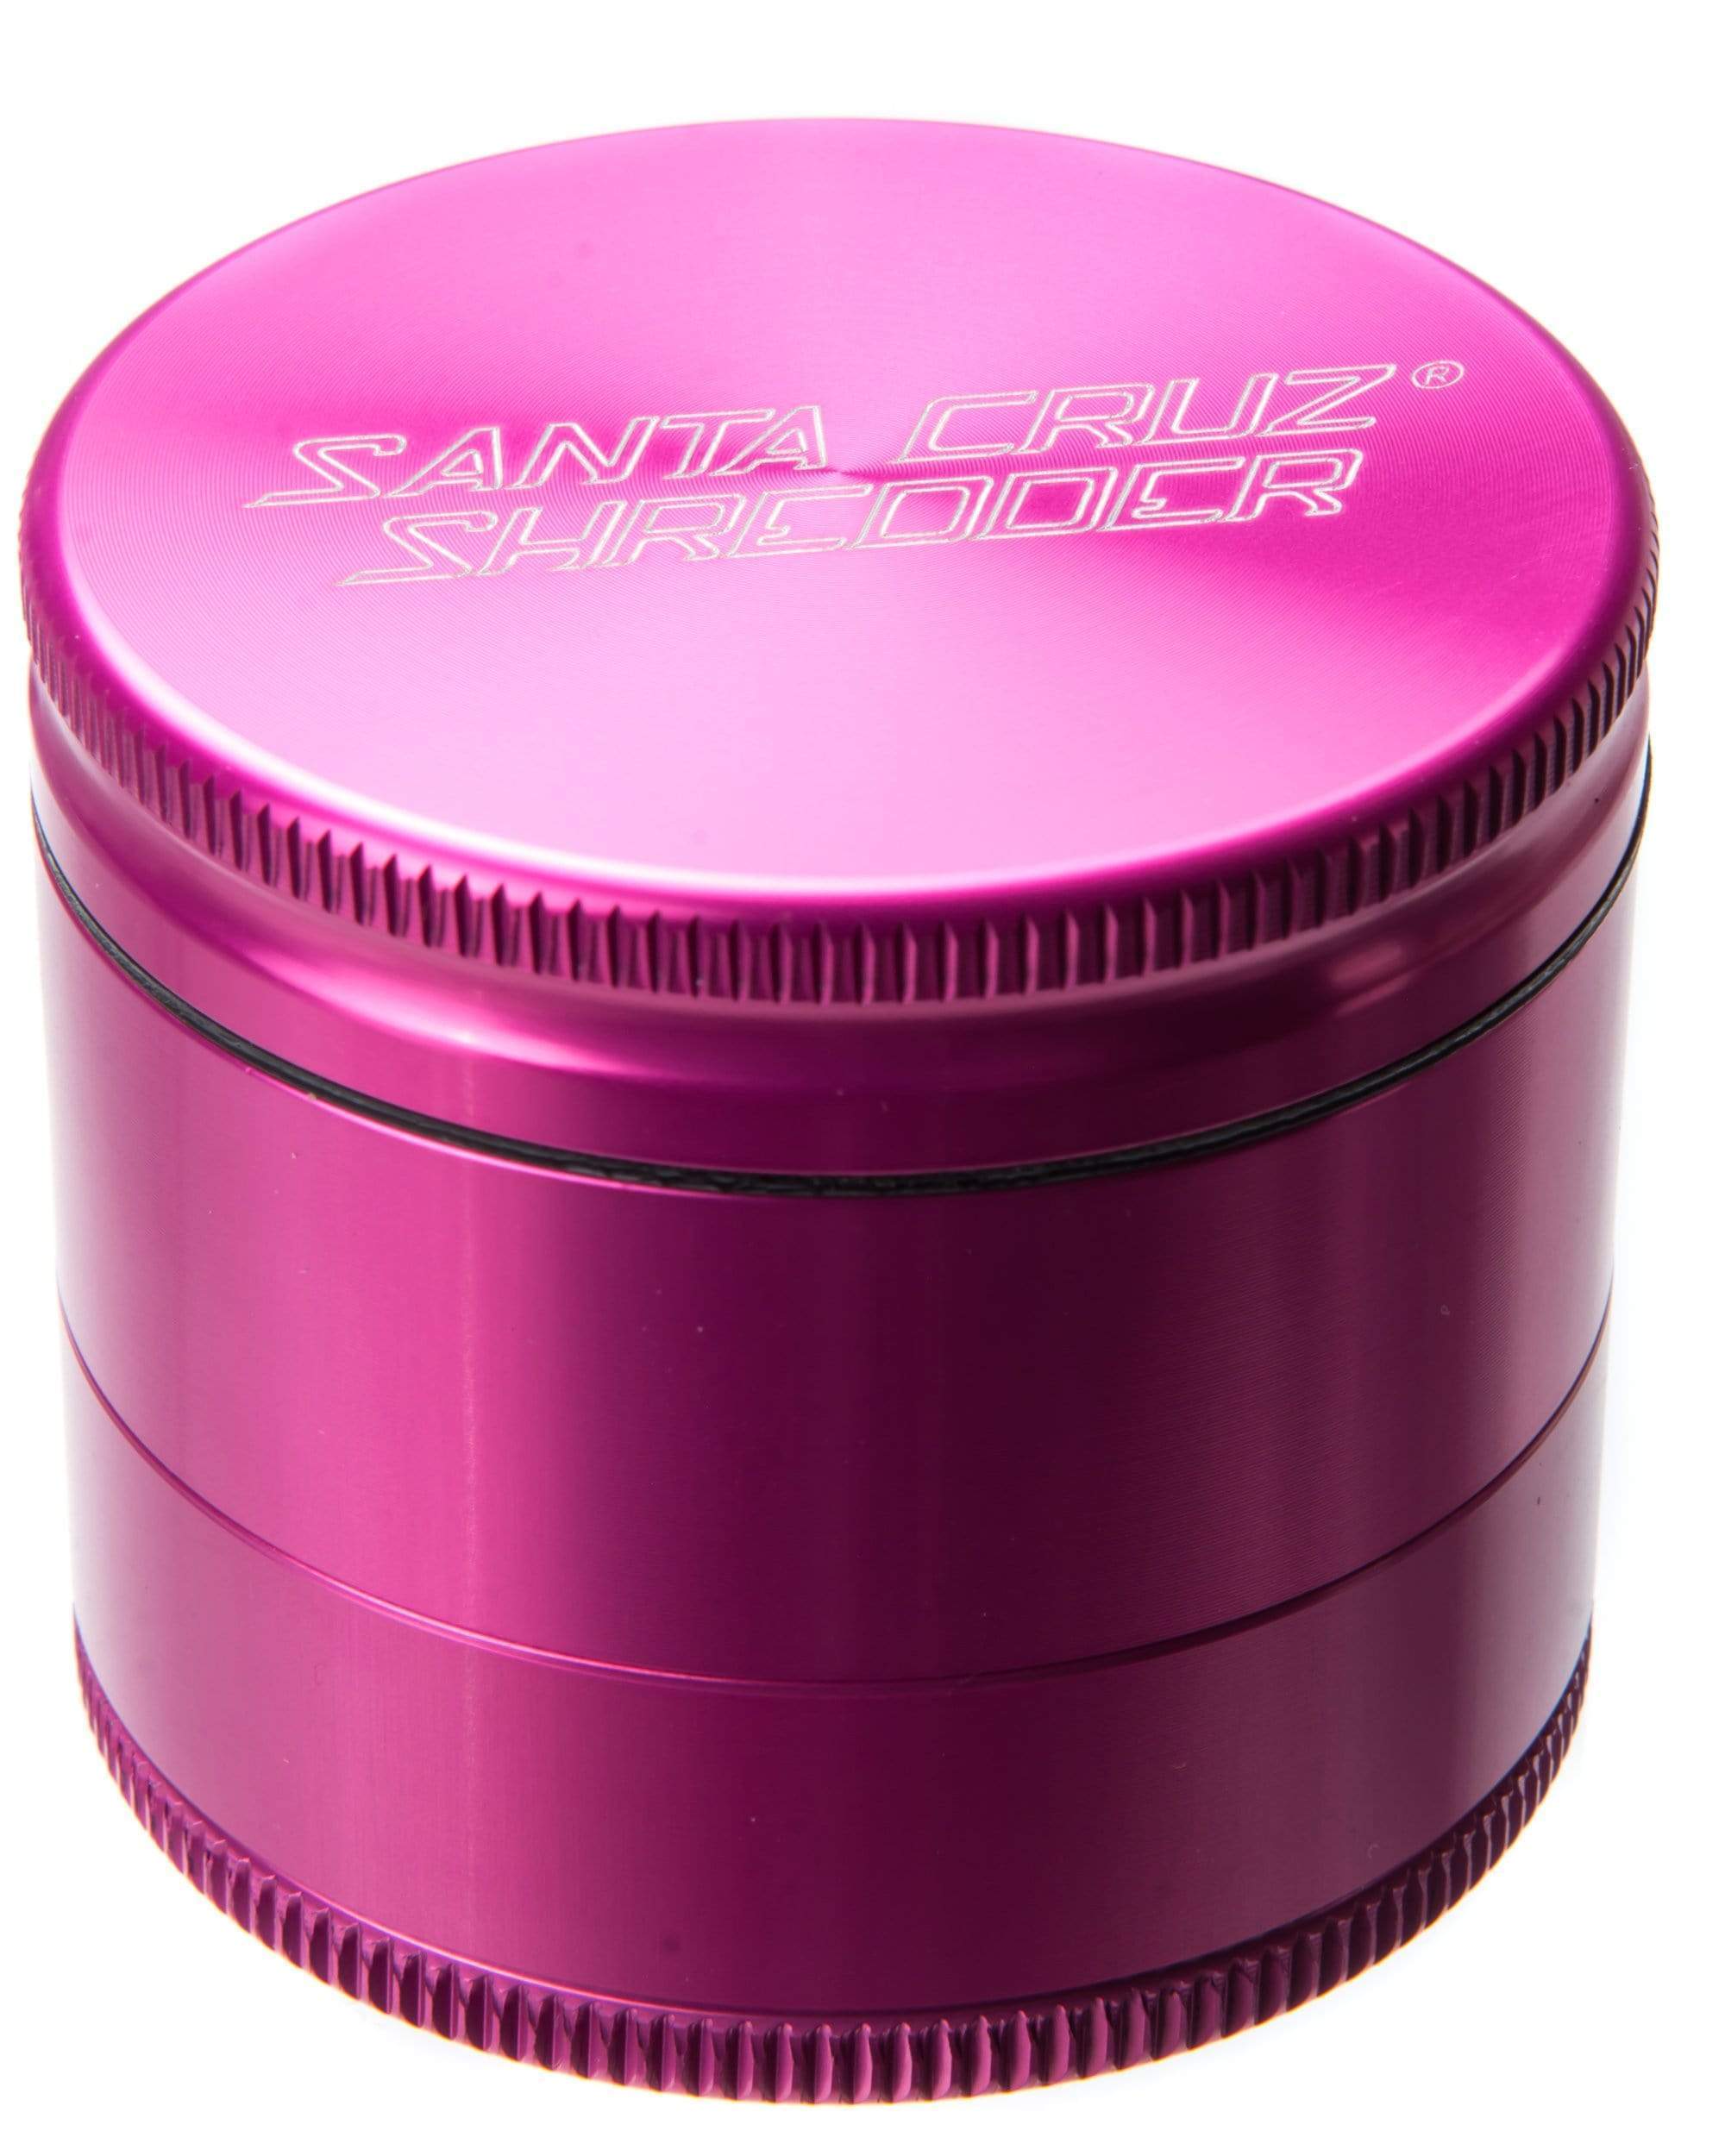 Santa Cruz Shredder Pink grinder 373400000000